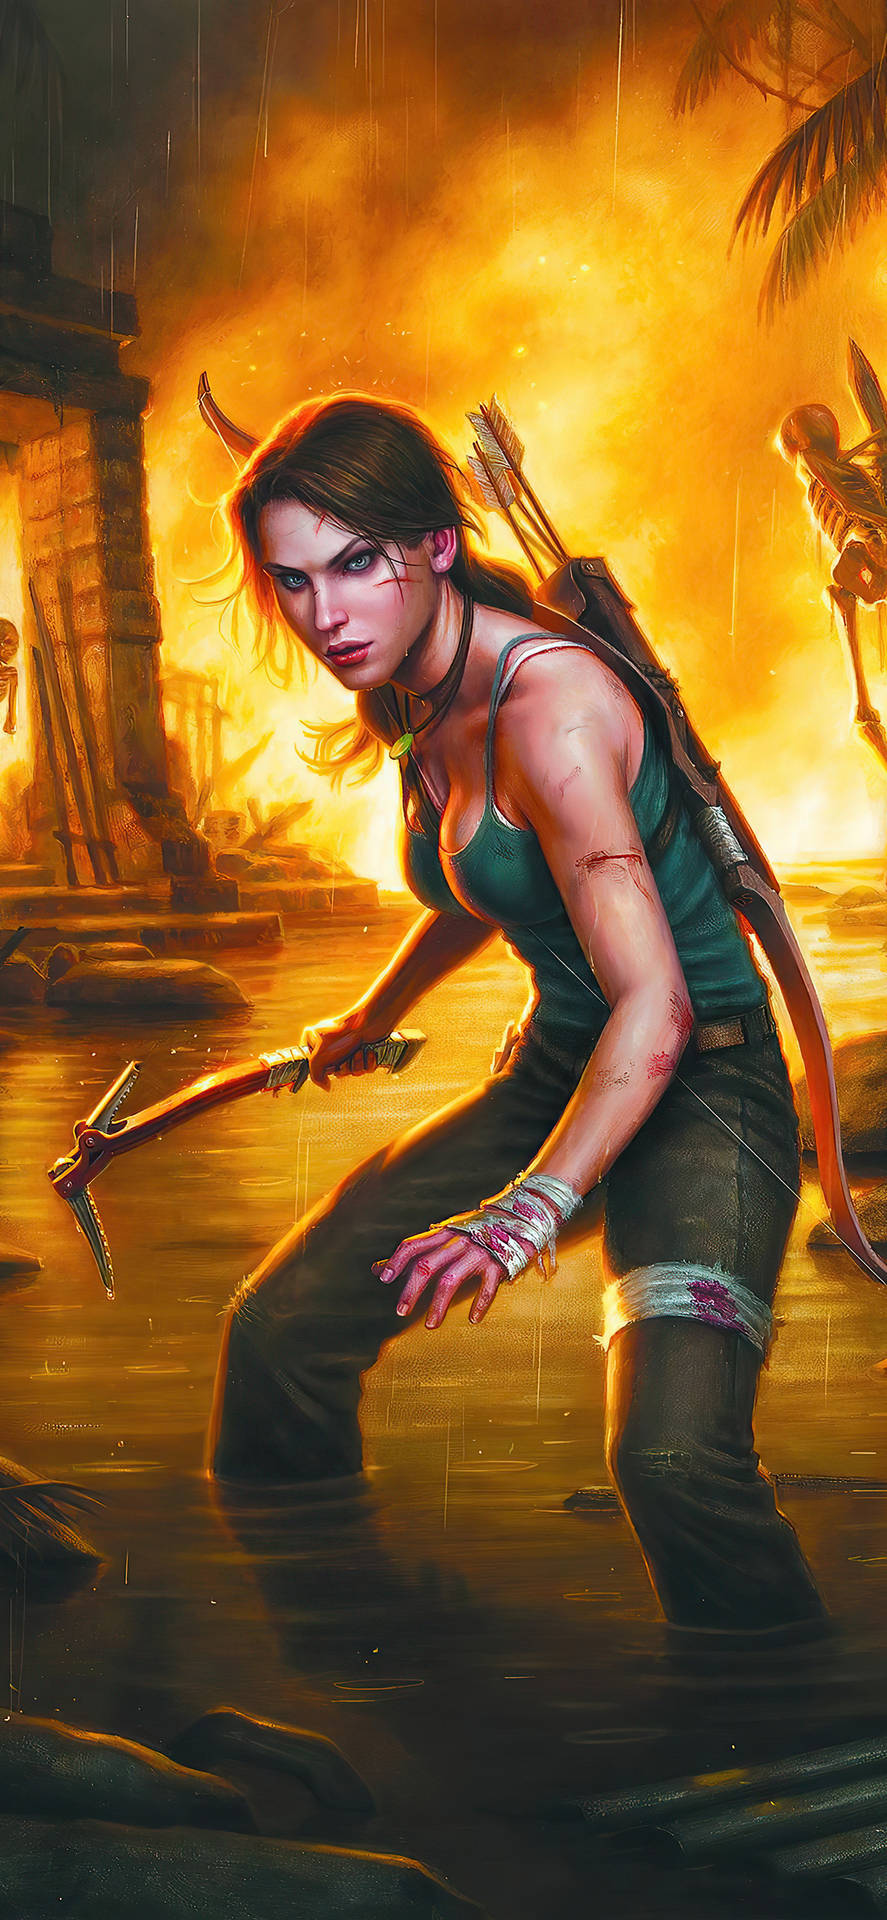 Unlock your inner adventurer with the Lara Croft iPhone Wallpaper